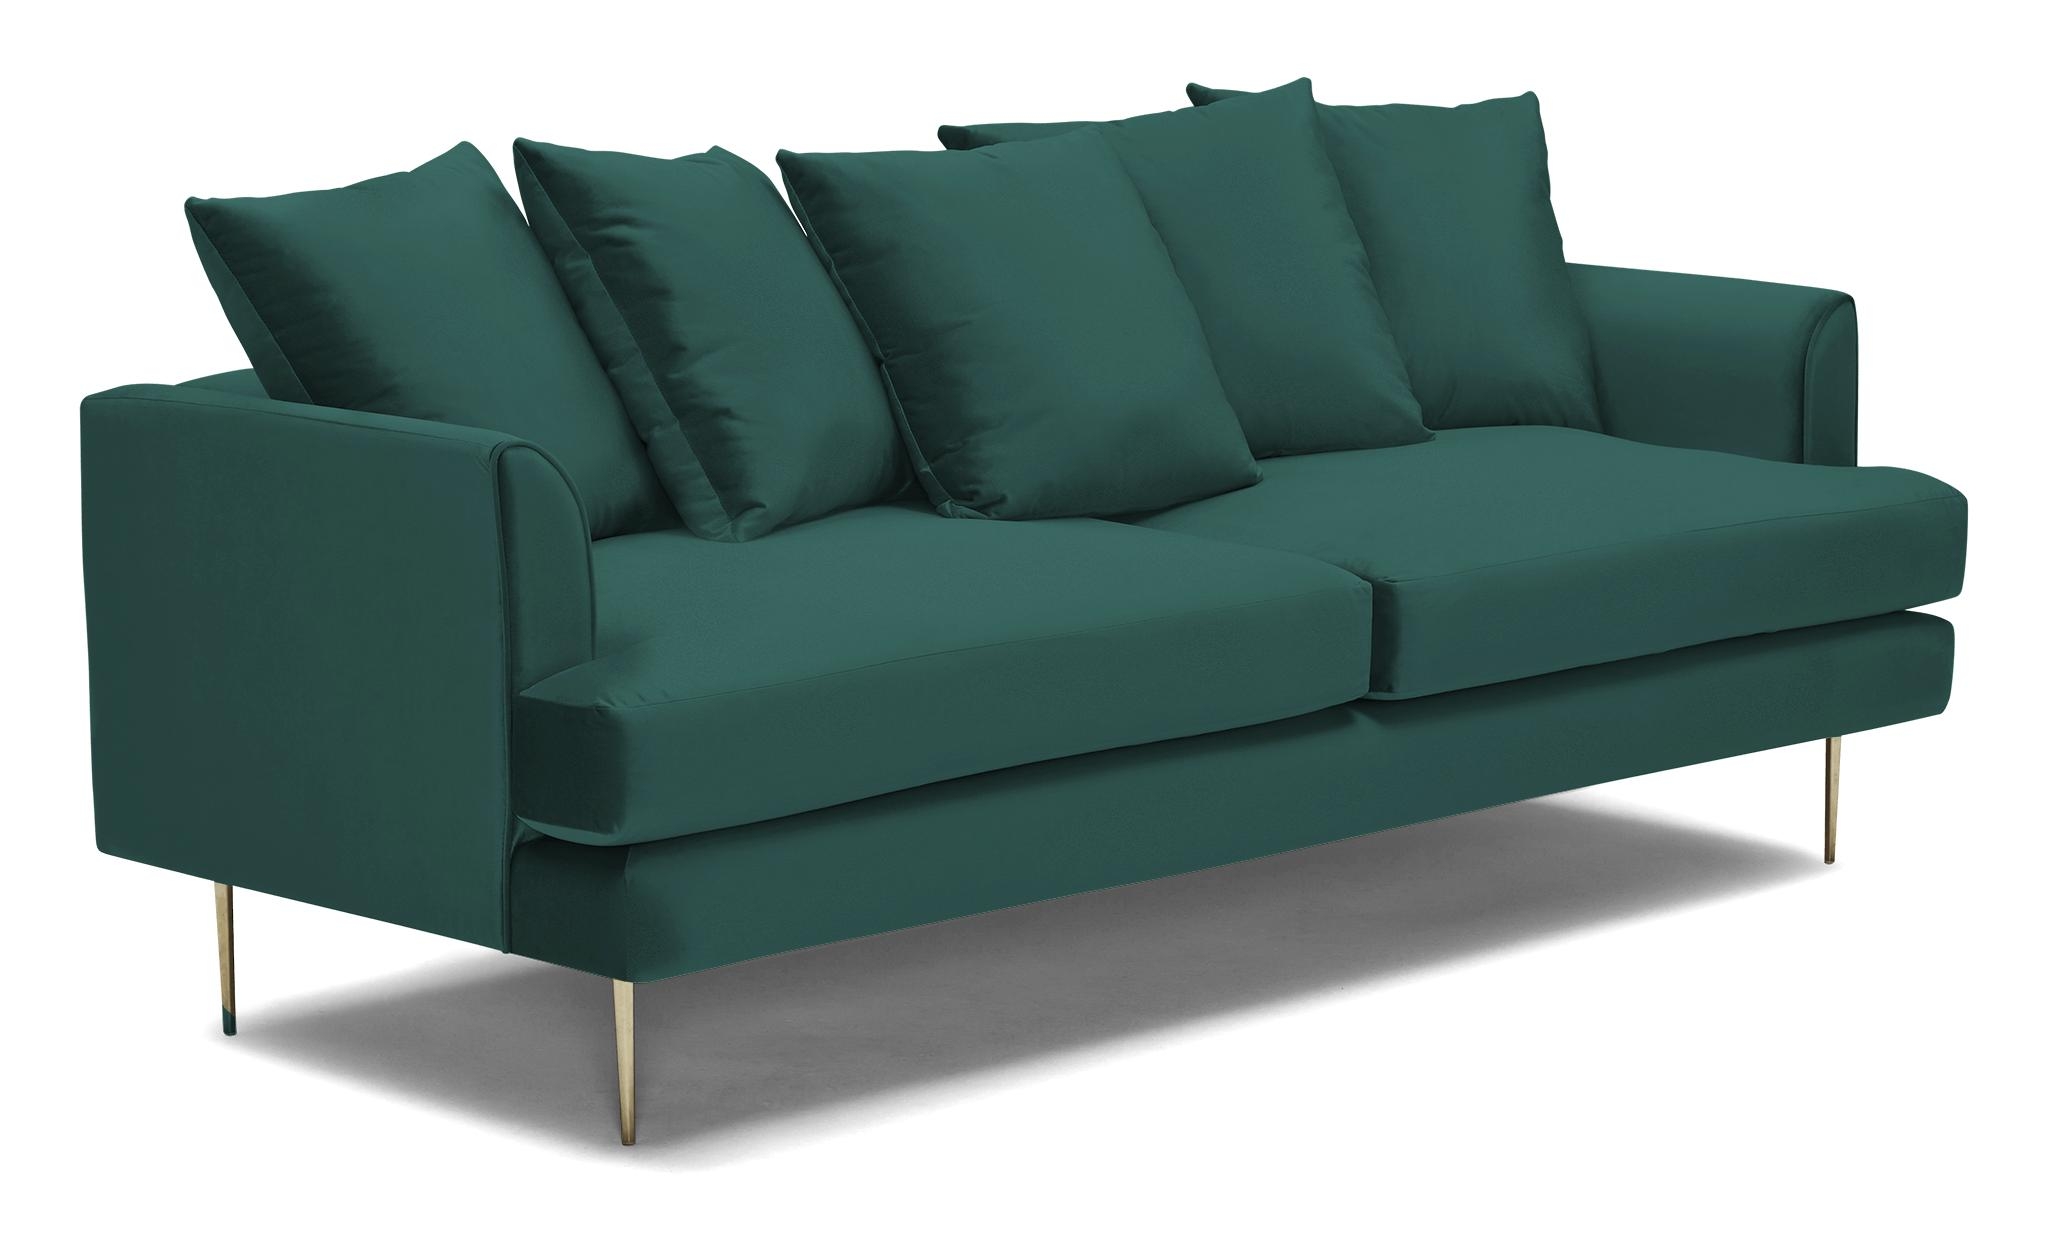 Blue Aime Mid Century Modern Sofa - Prime Peacock - Image 1